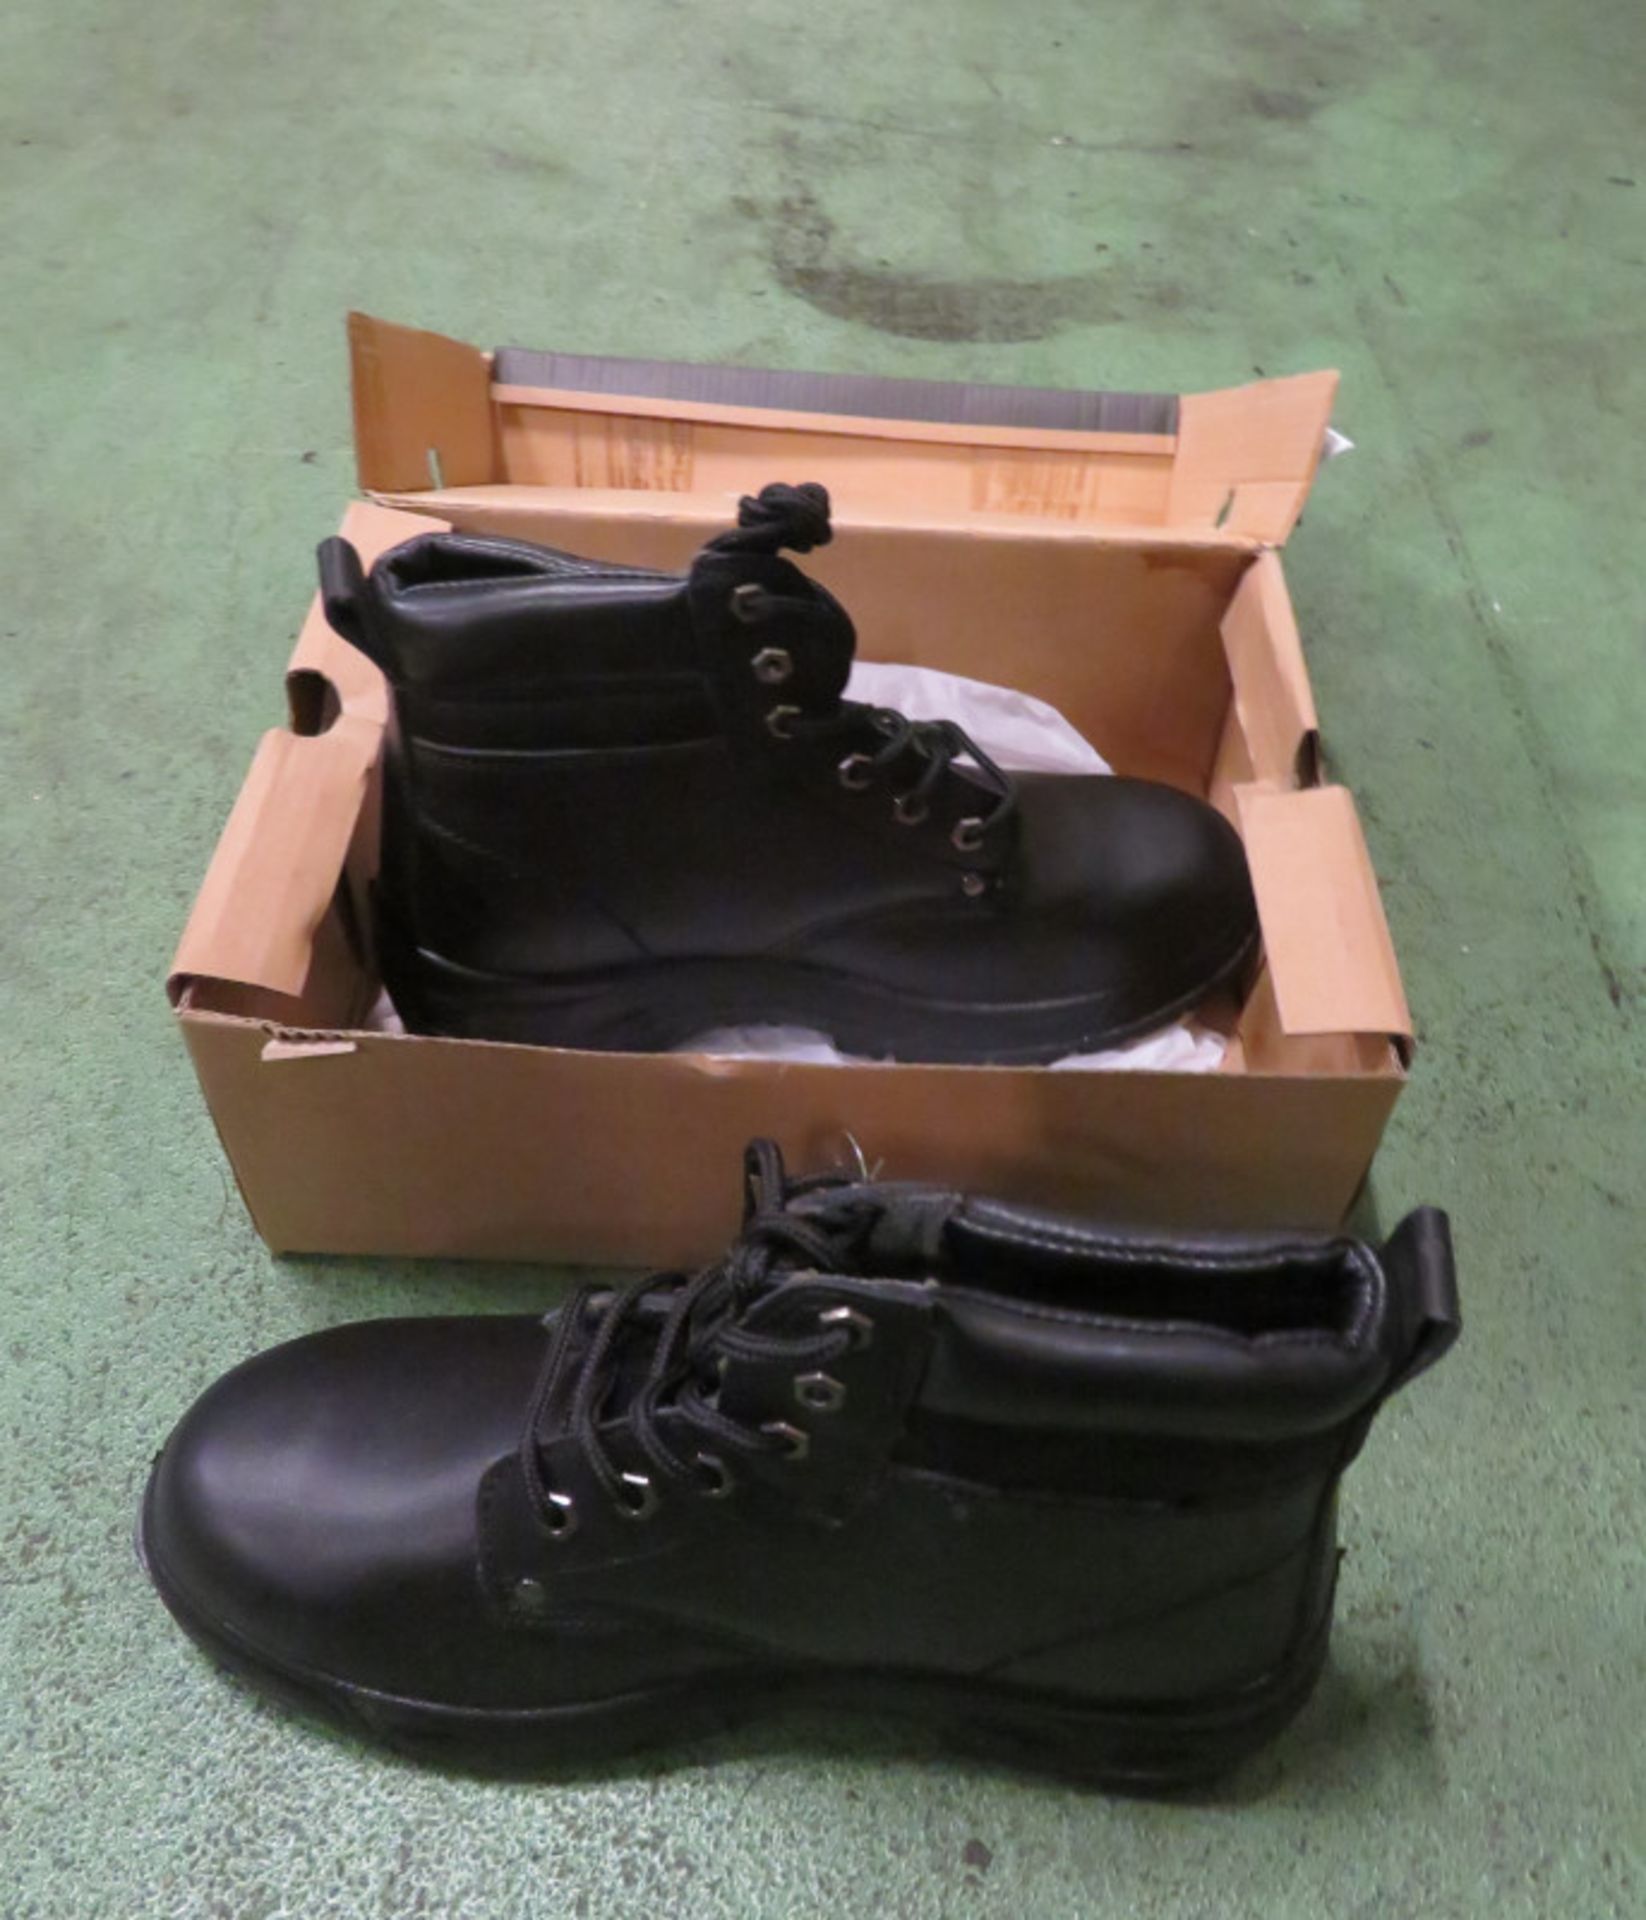 Portwest safety steelite boot FW03 - 6.5UK 40euro - Image 2 of 2